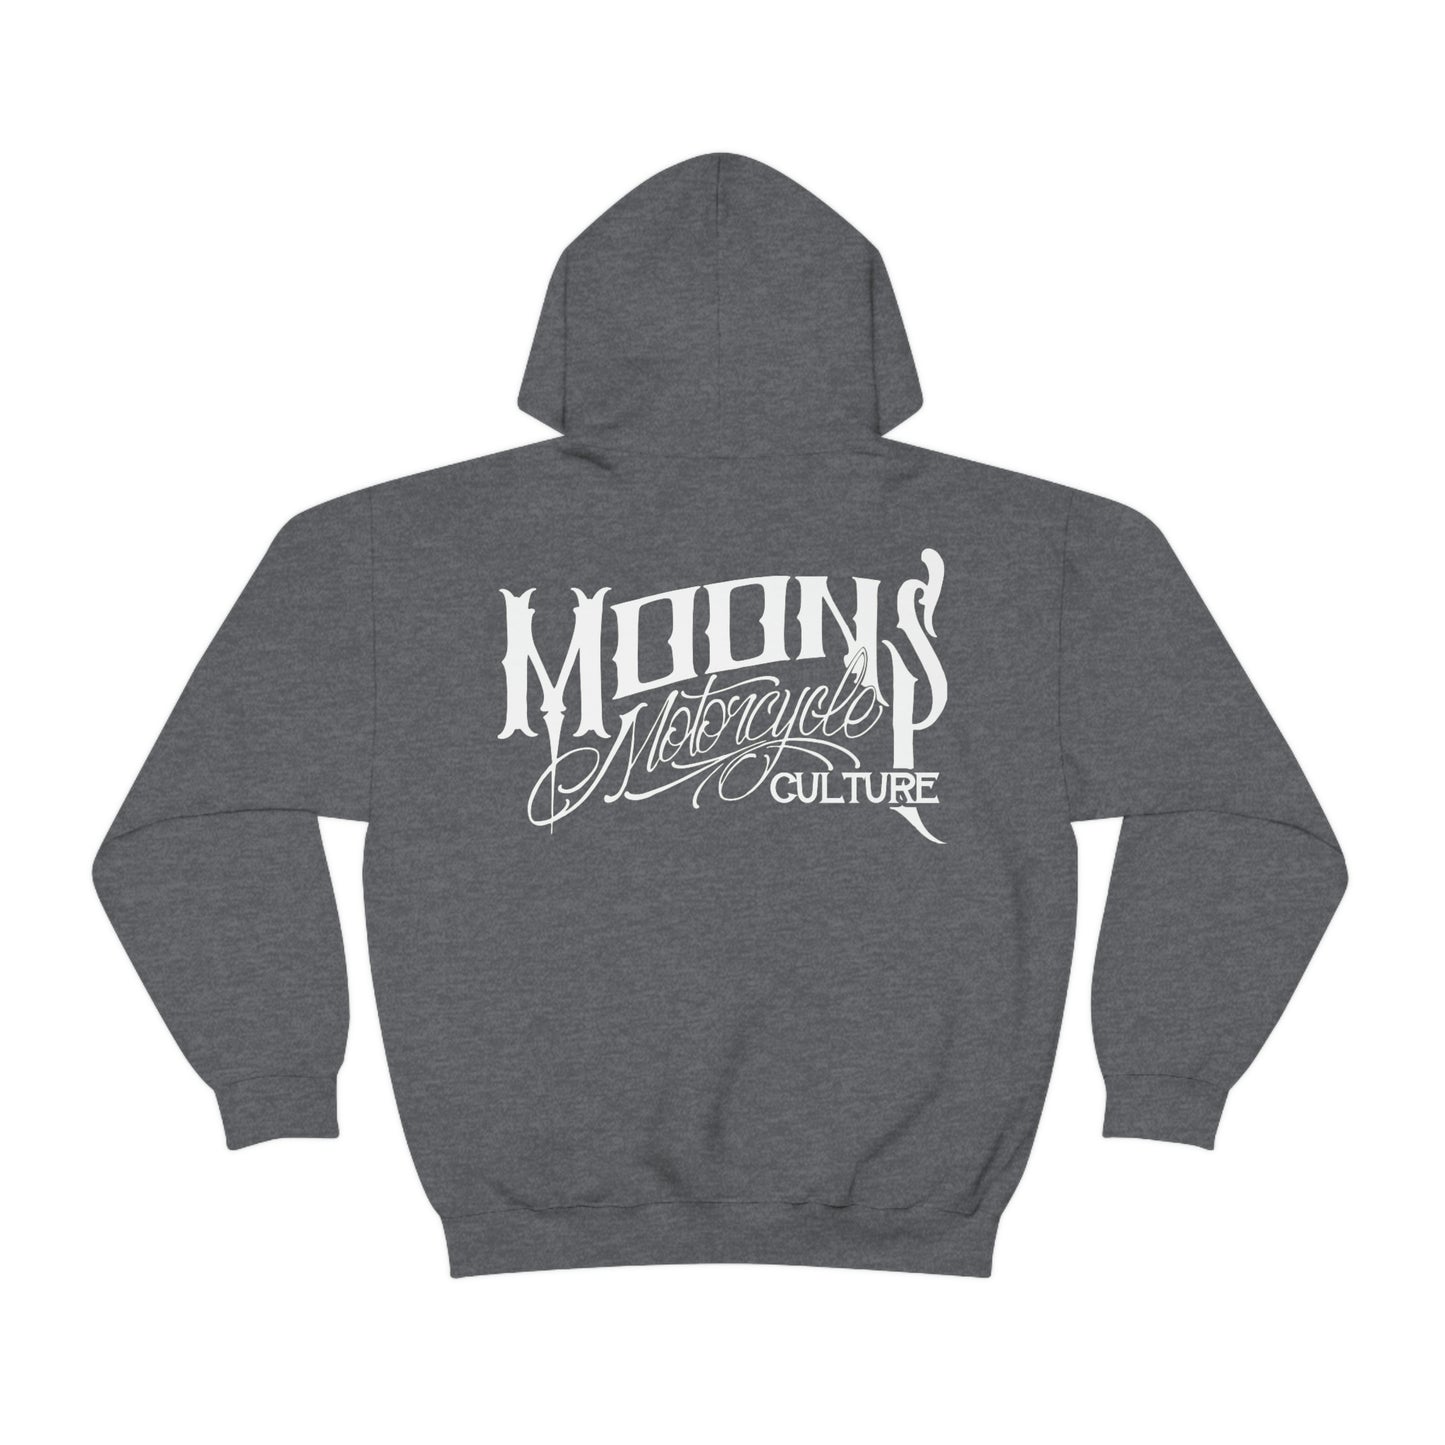 MOONSMC® OG Logo Hooded Sweatshirt